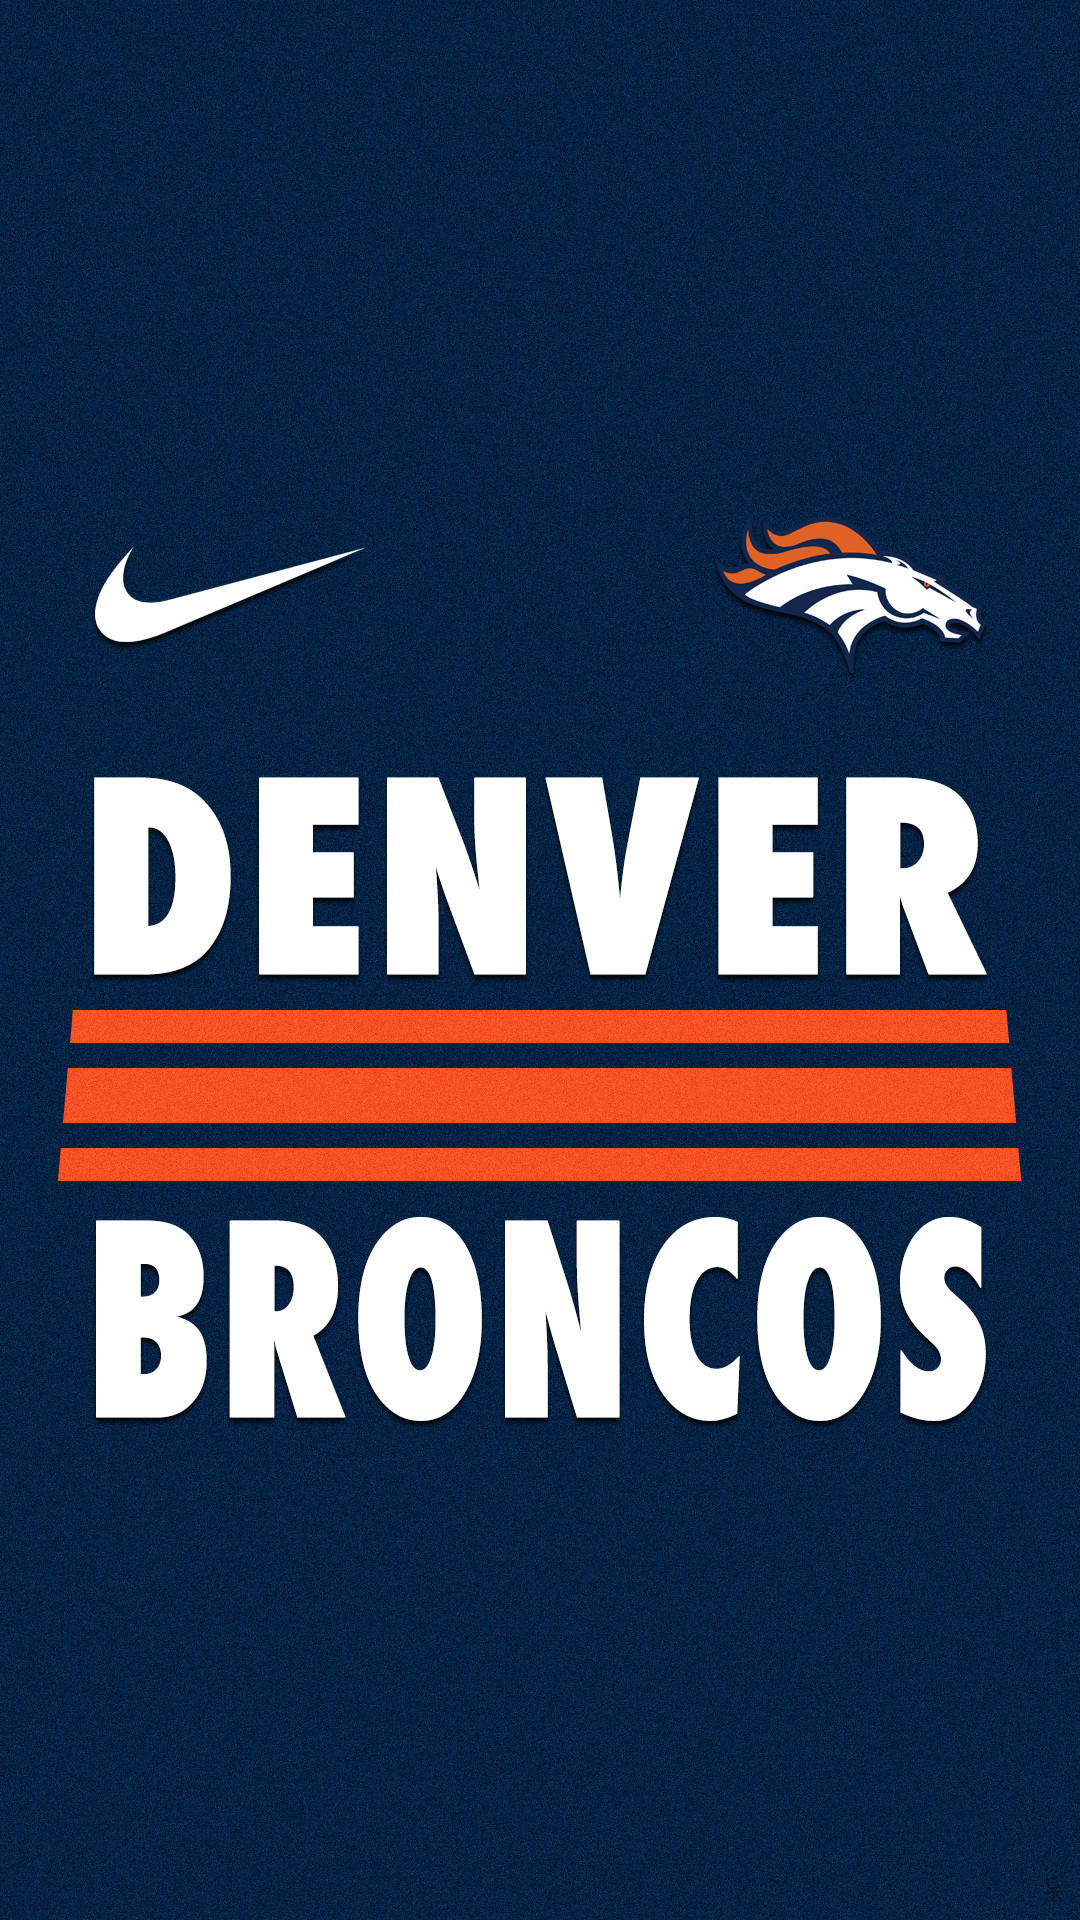 Denver Broncos Iphone With Nike Logo Background